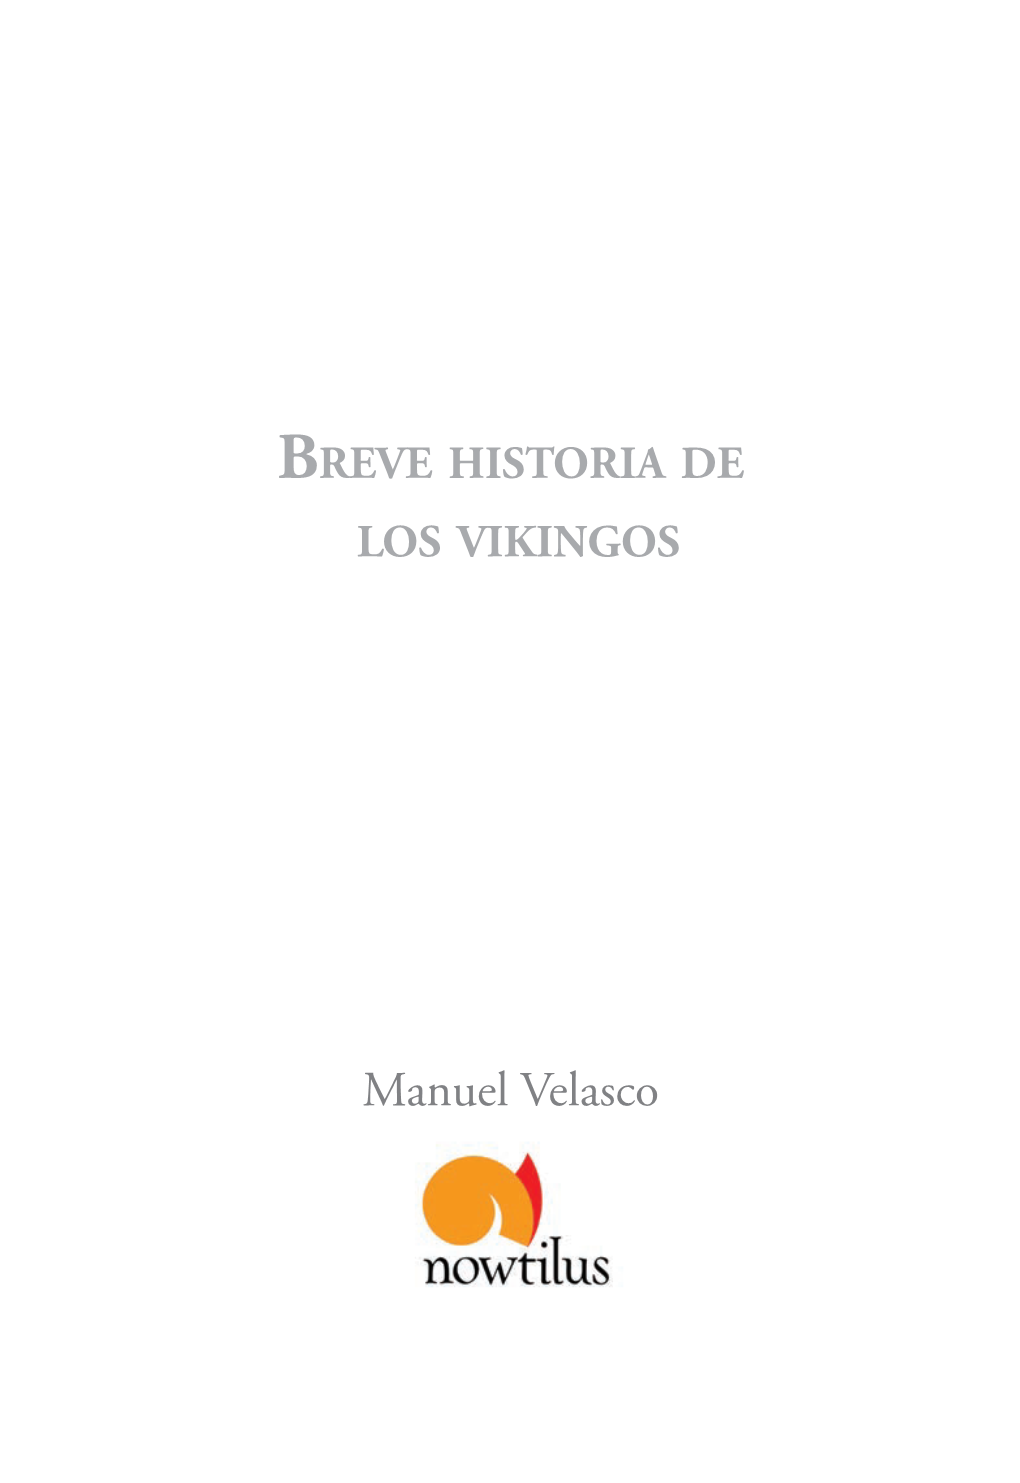 BH VIKINGOS.Indd 5 3/29/2012 5:30:32 PM Colección: Breve Historia